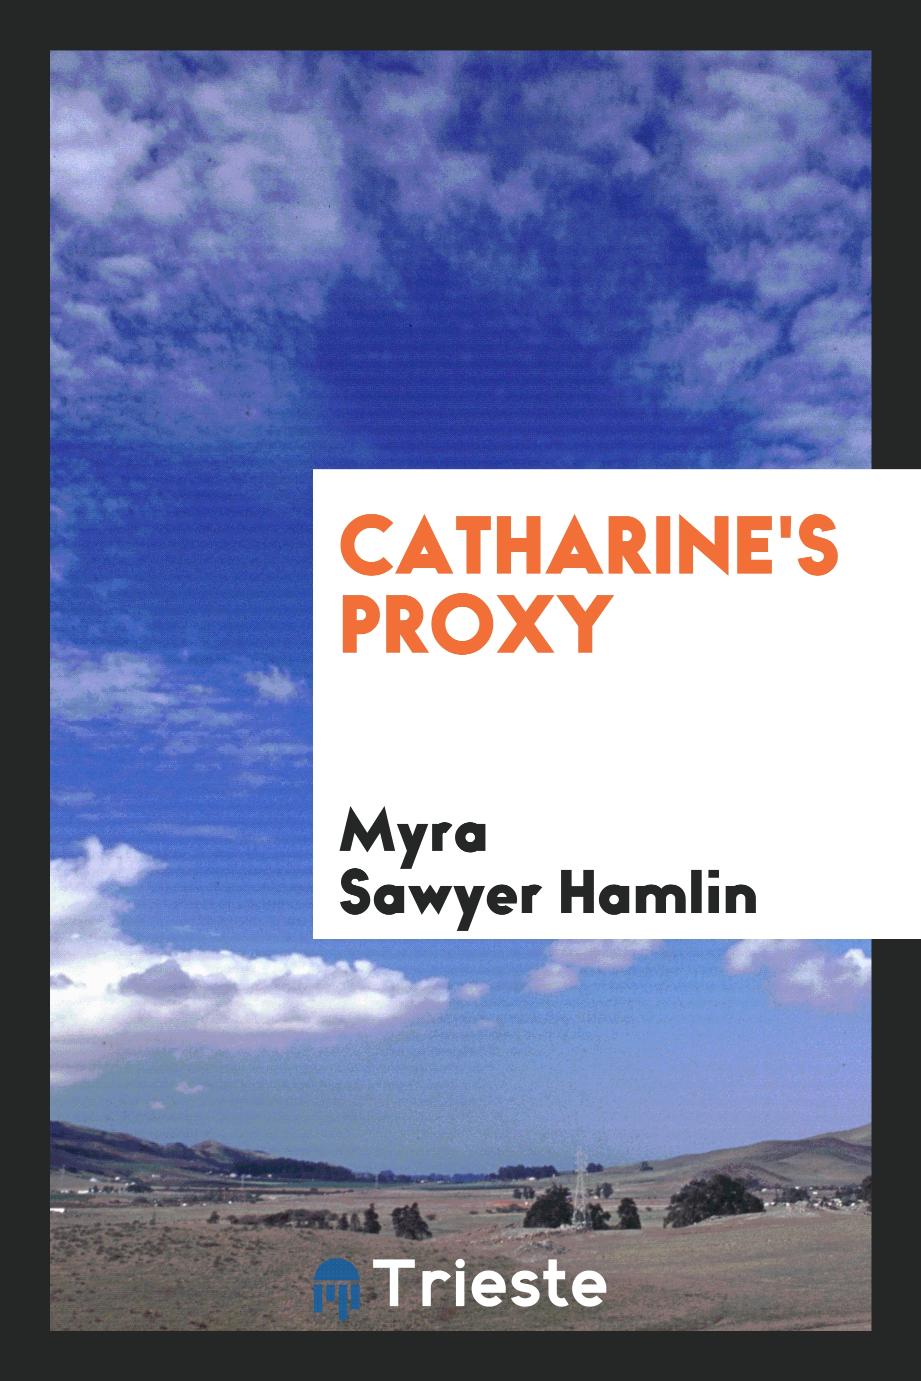 Catharine's proxy